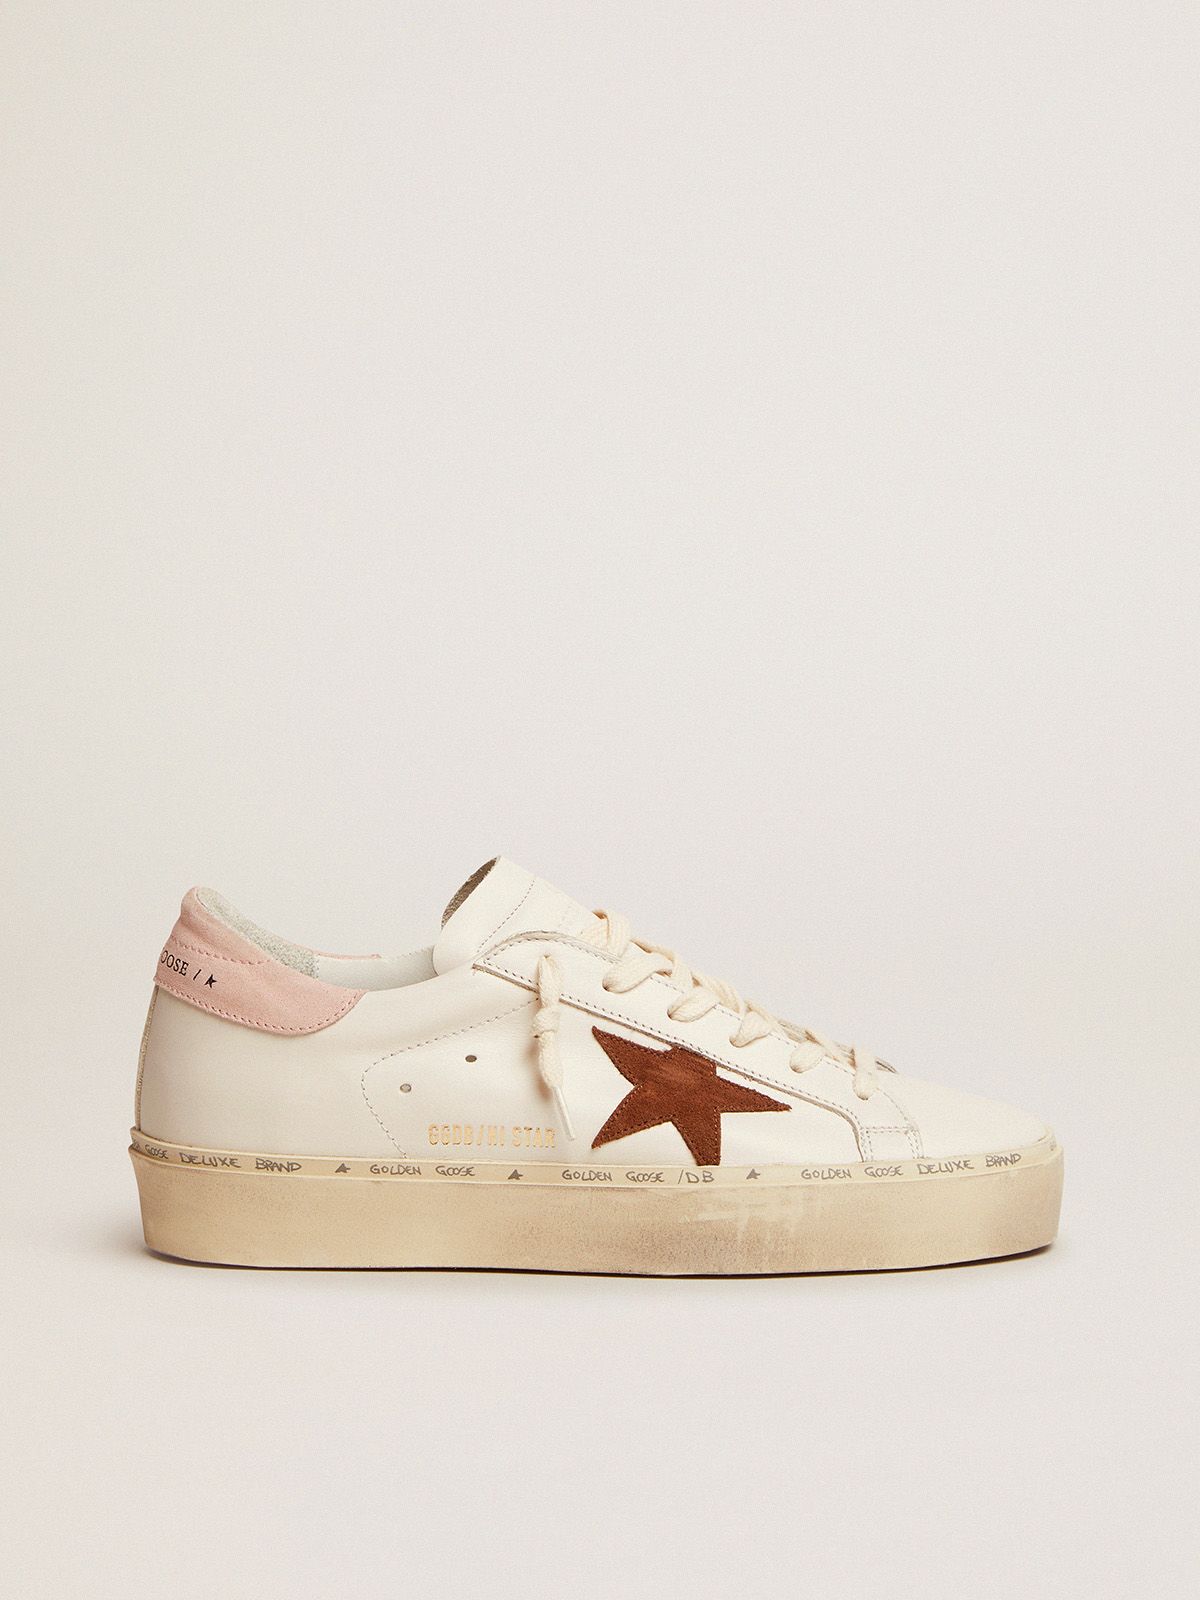 Hi Star LTD sneakers with brown suede star and pink suede heel tab